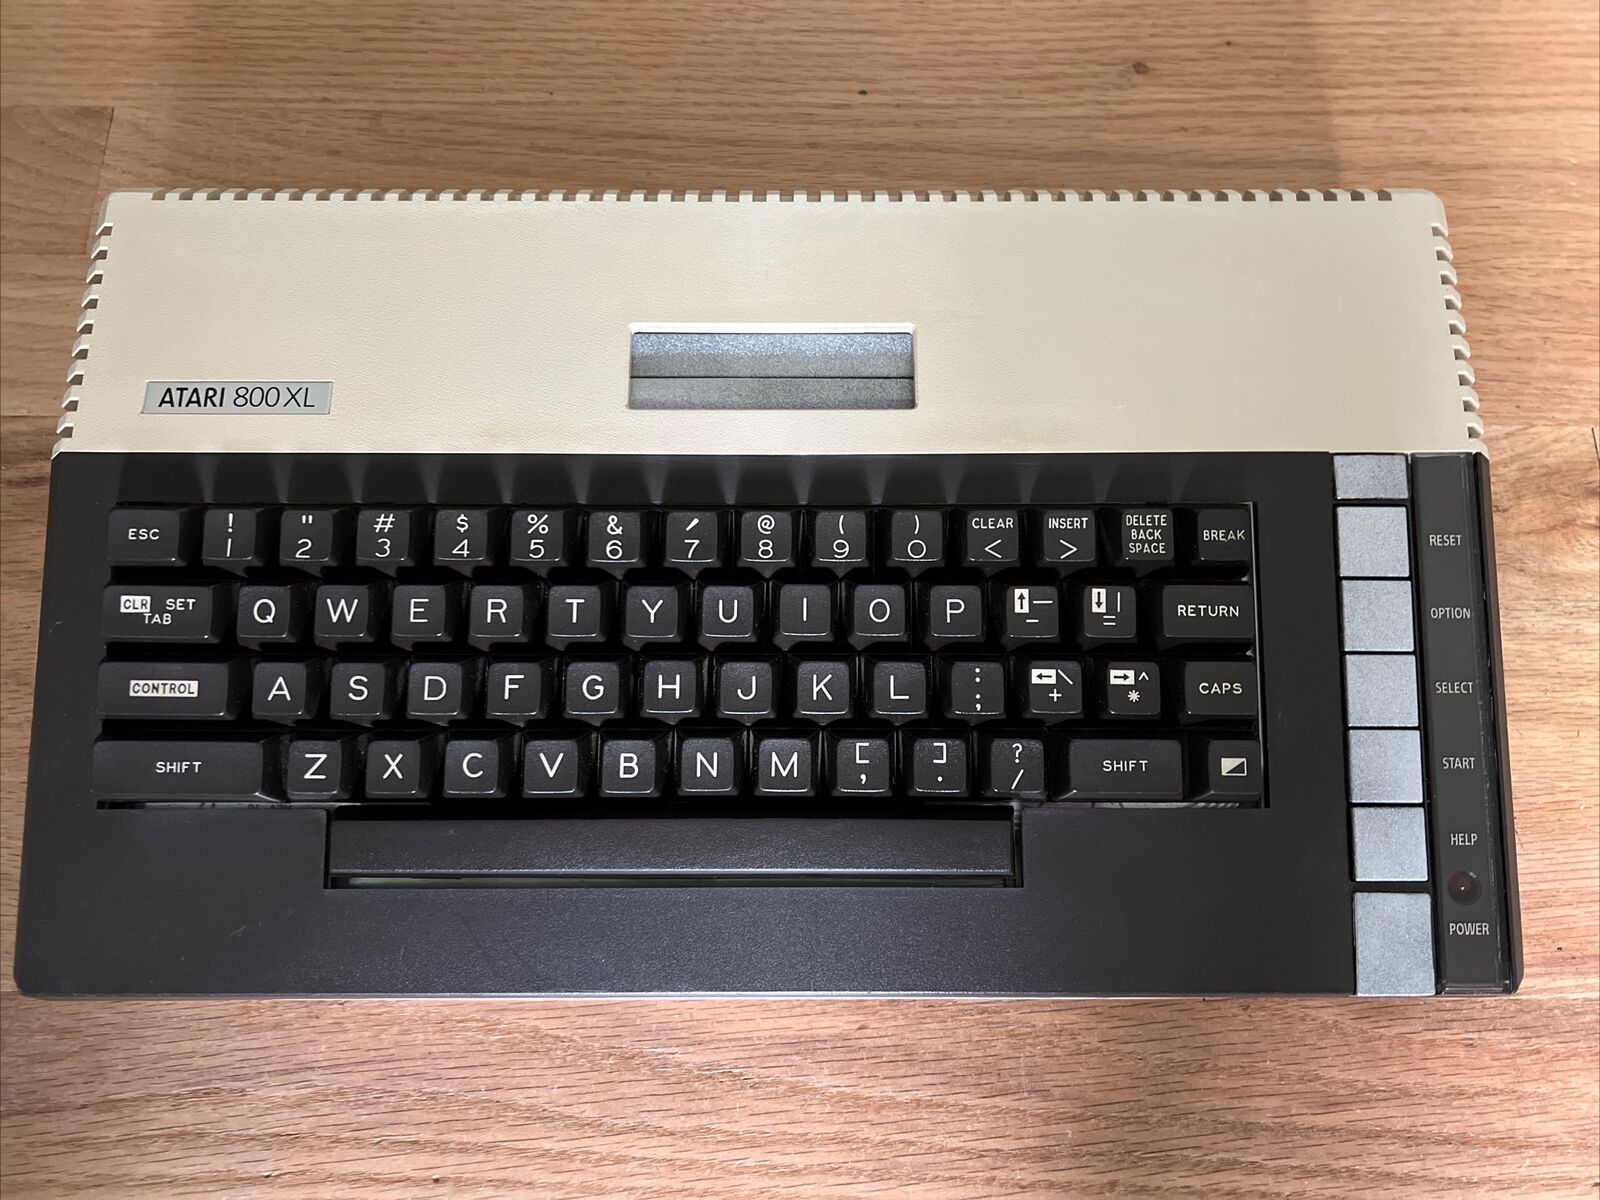 Atari 800xl nice condition.  AtariMax cartridge loaded with Games.  Socketed MB